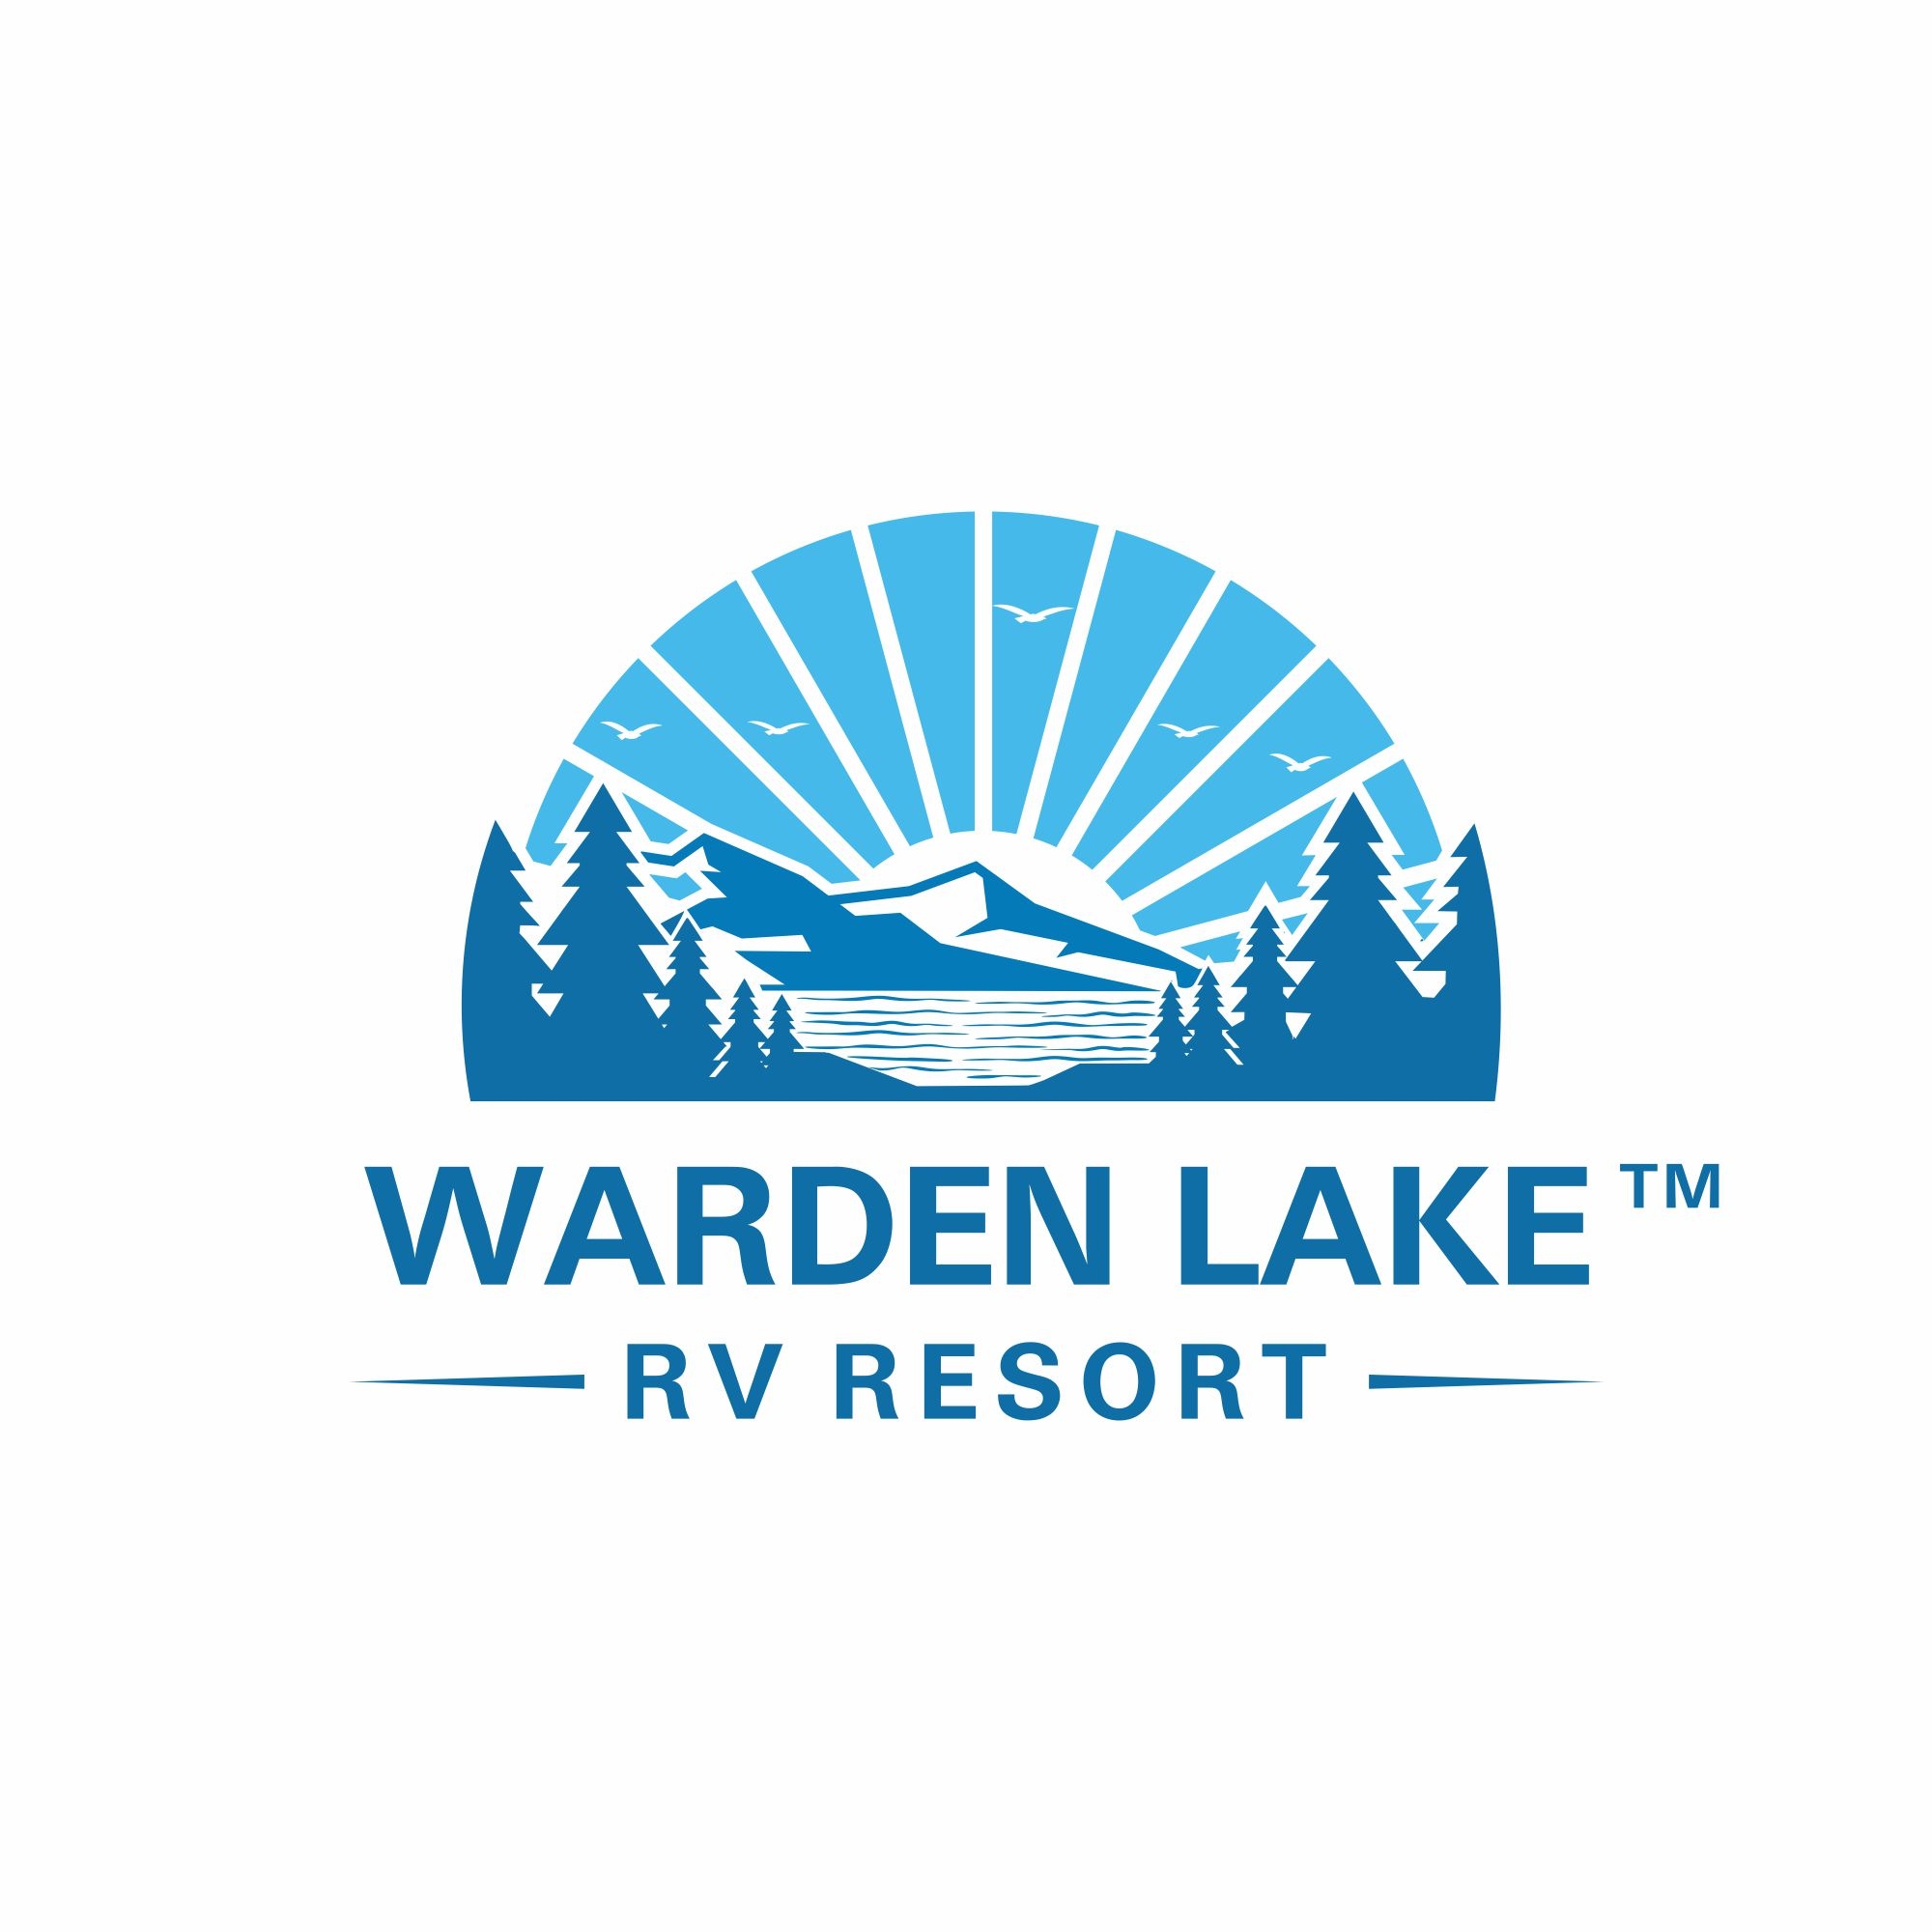 Warden Lake RV